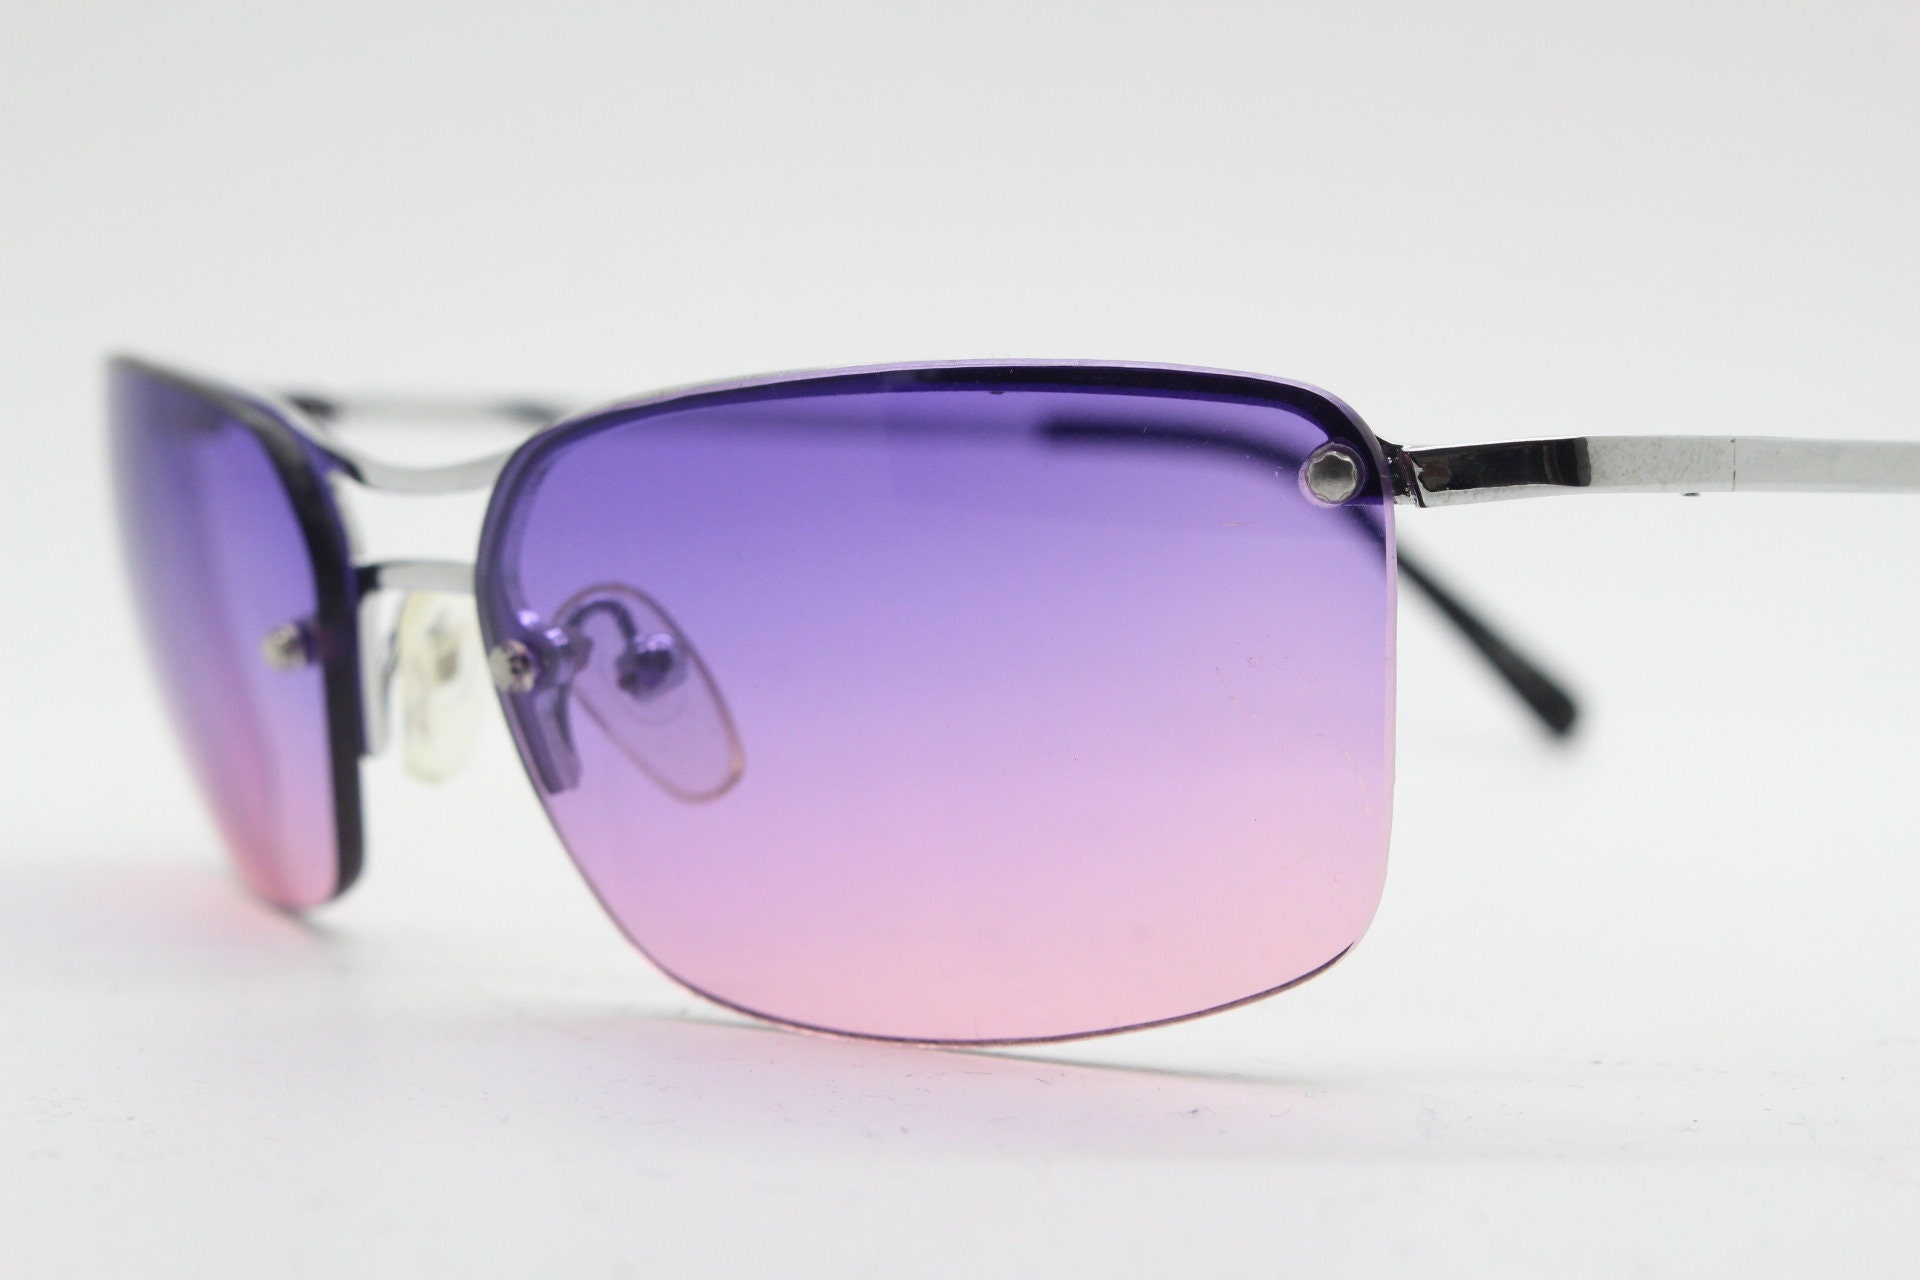 Y2K Vintage Big Rectangle Visor Sunglasses. Half Frame 2000's Chrome Trim Wrap Around with Lethal Purple Curved Lenses. 00's